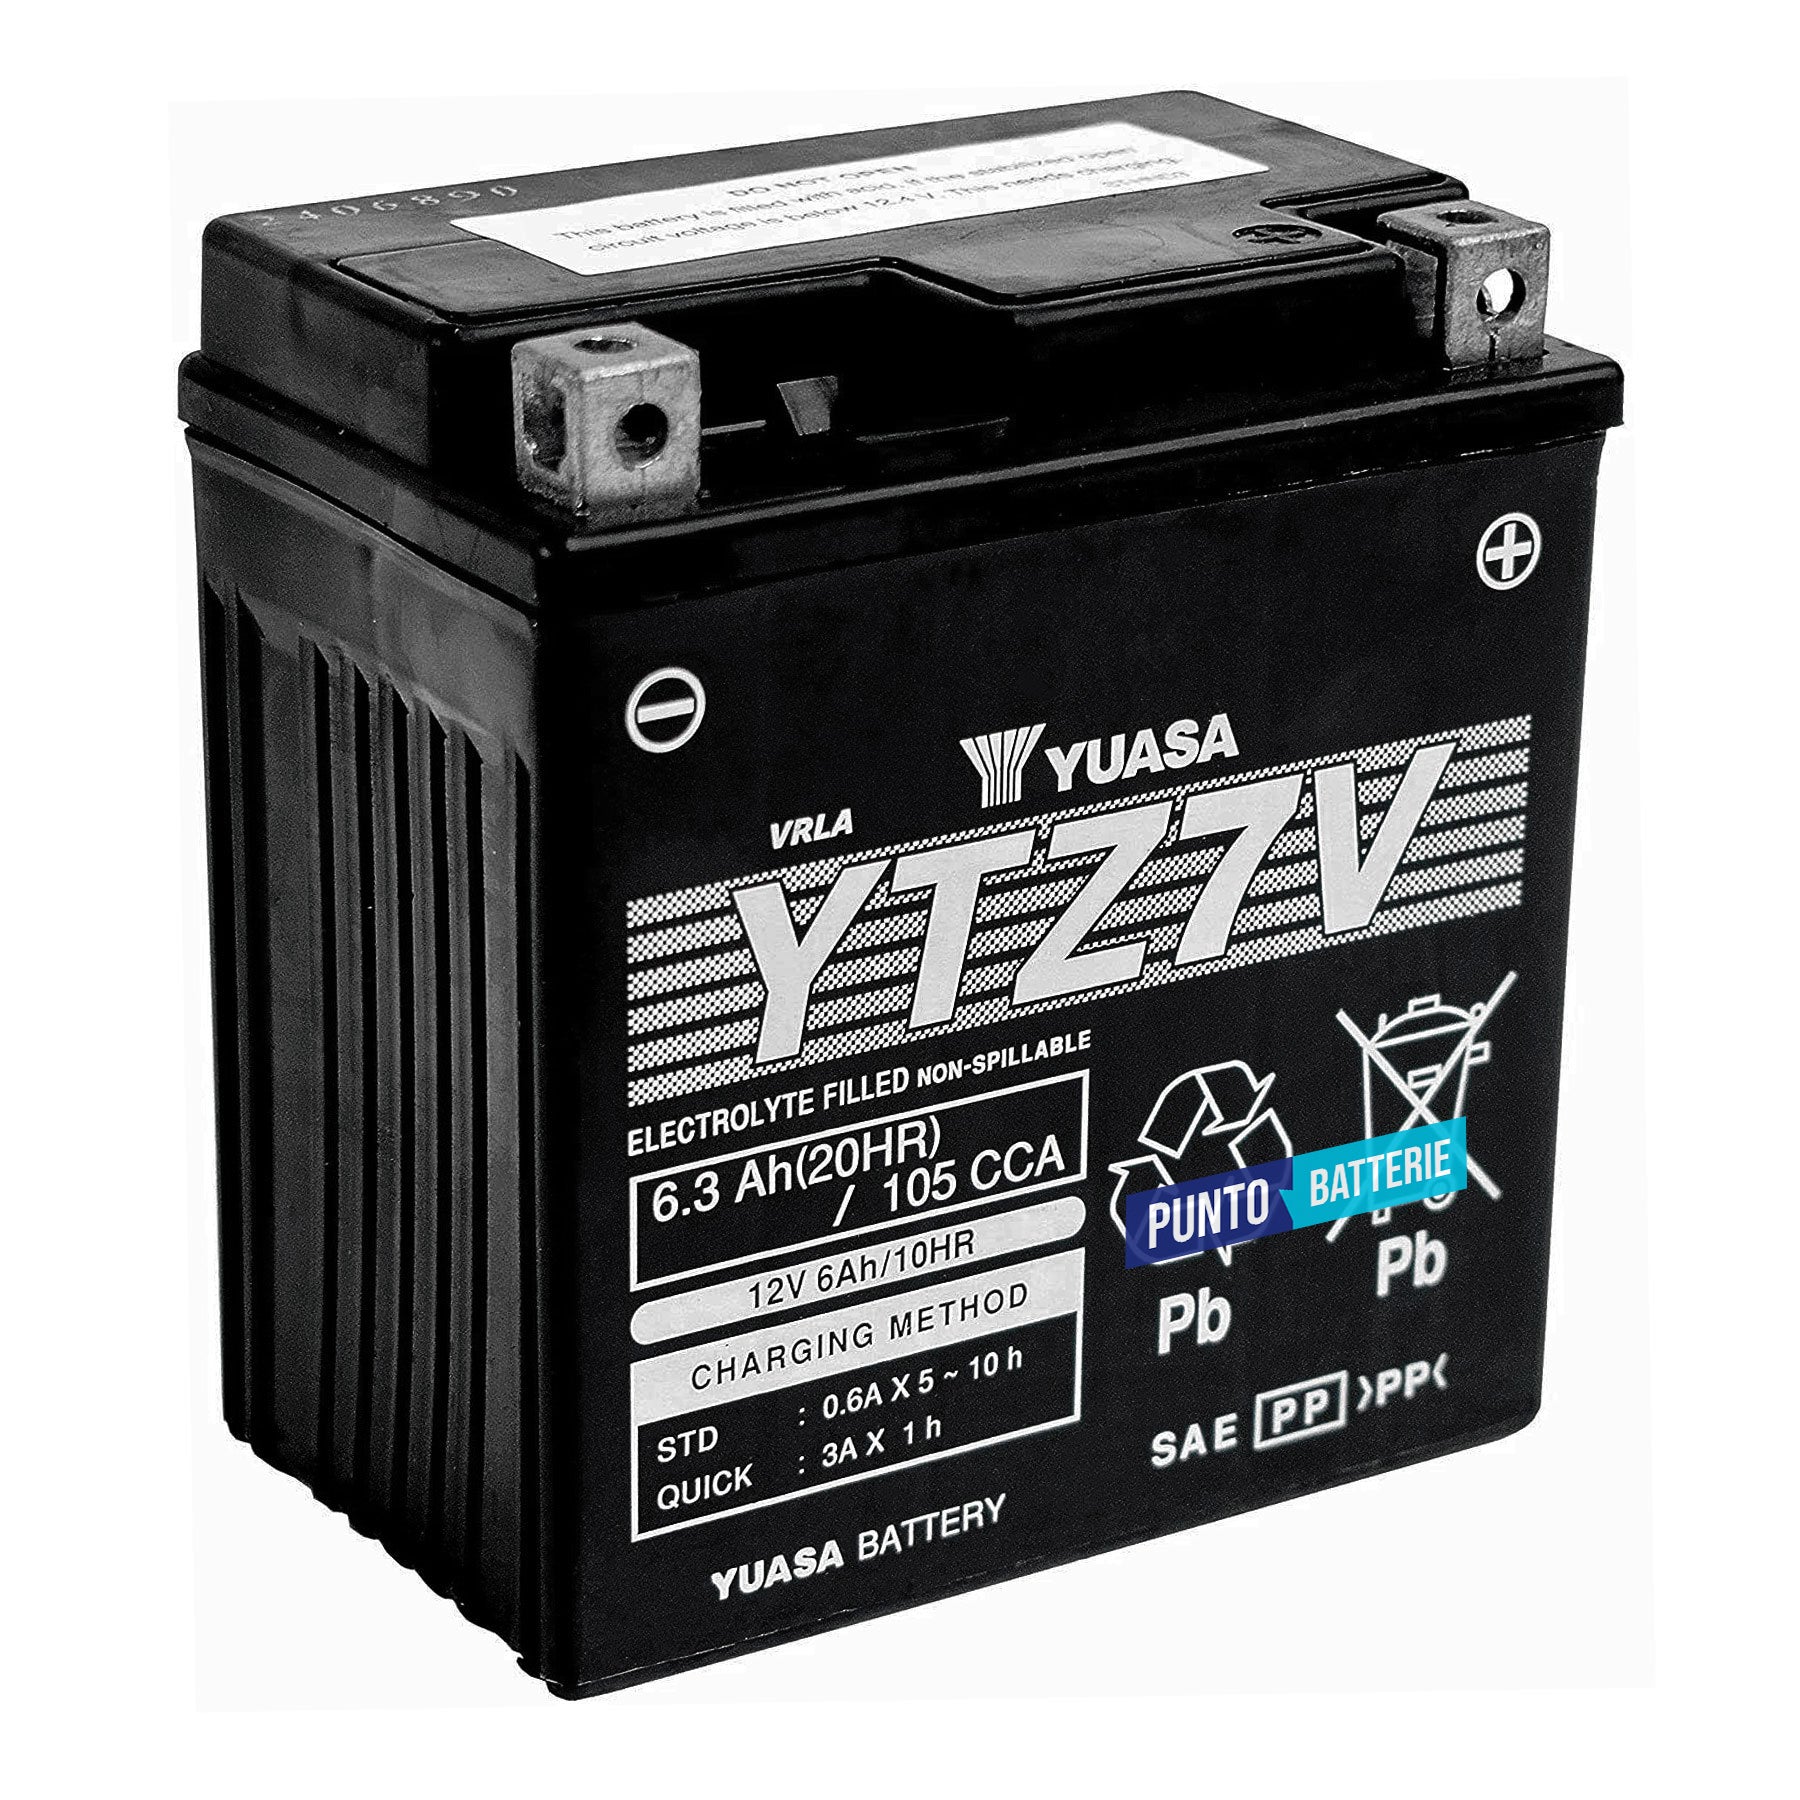 Batteria originale Yuasa YTZ YTZ7V, dimensioni 113 x 70 x 120, polo positivo a destra, 12 volt, 6 amperora, 105 ampere. Batteria per moto, scooter e powersport.